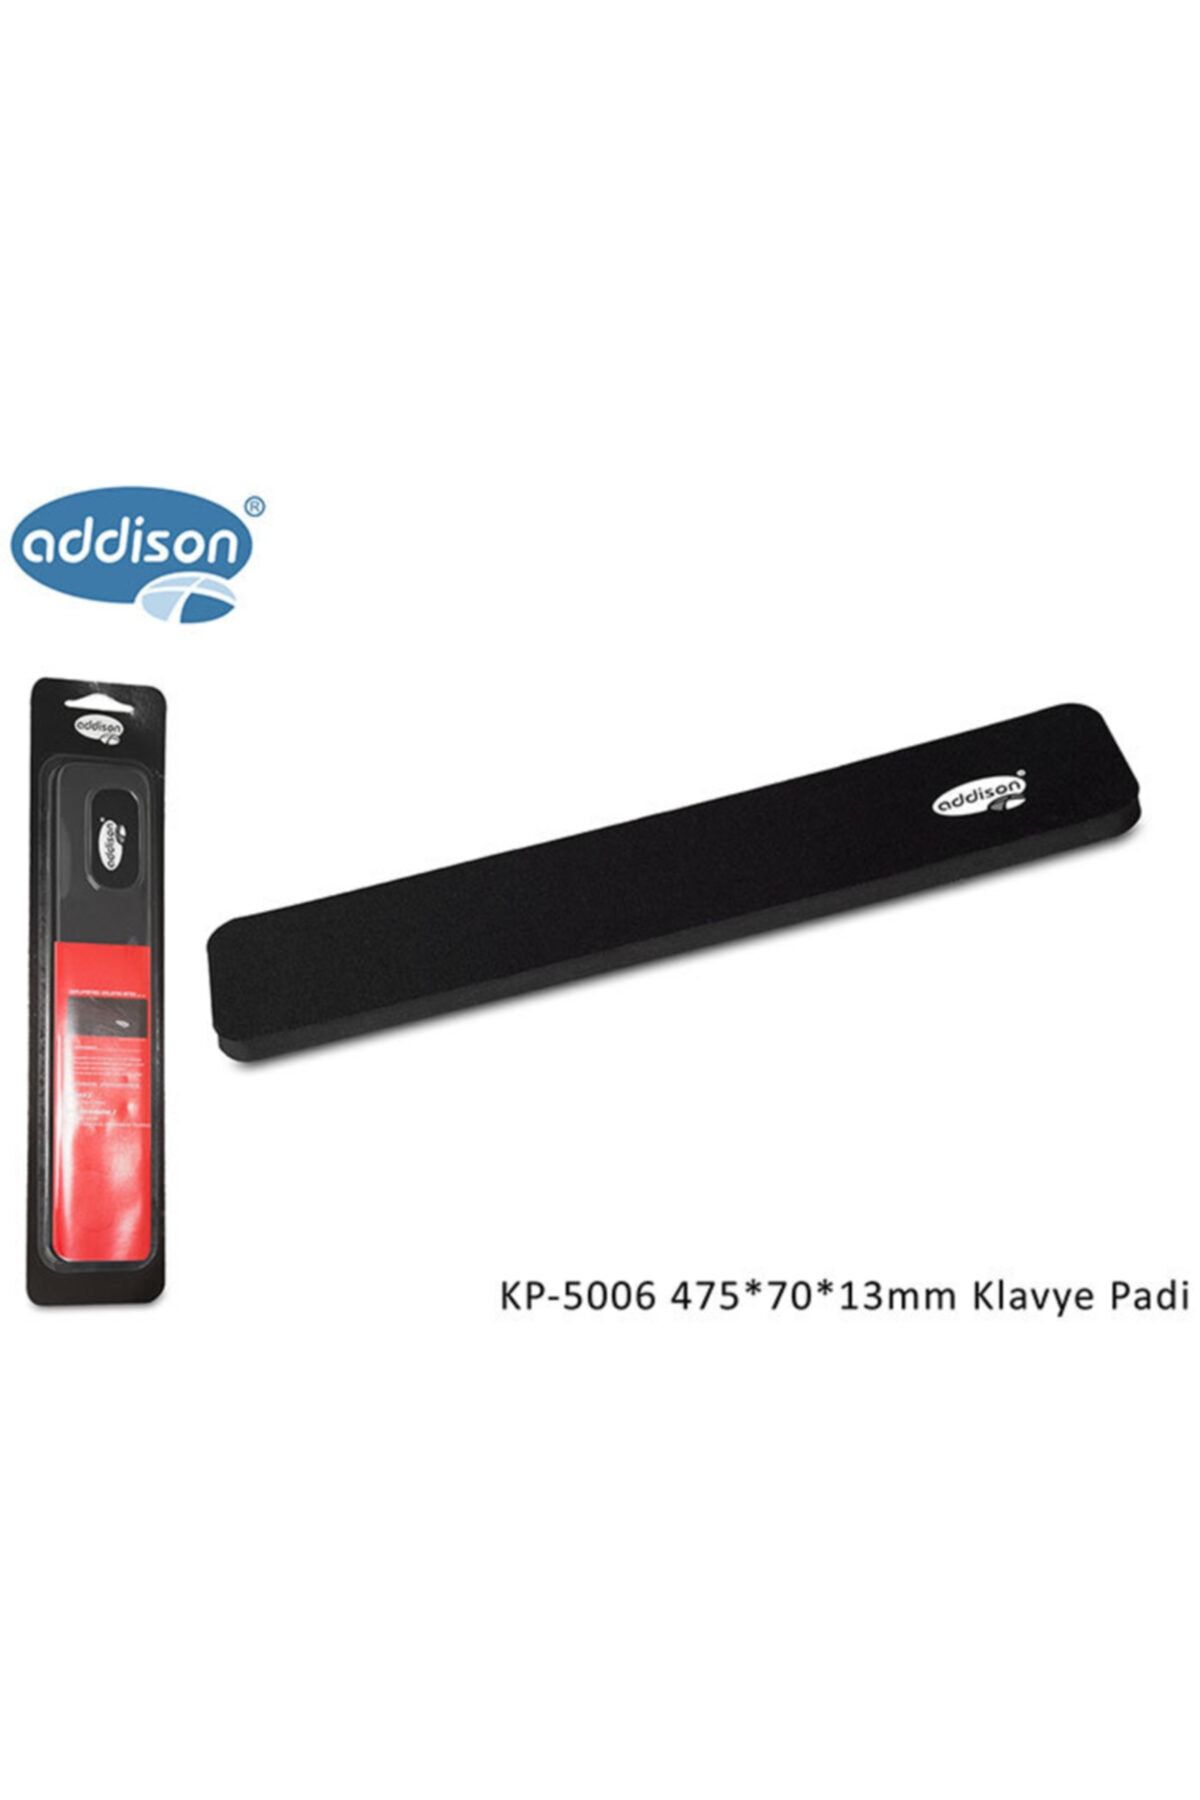 Addison Kp-5006 475*70*13mm Klavye Padii